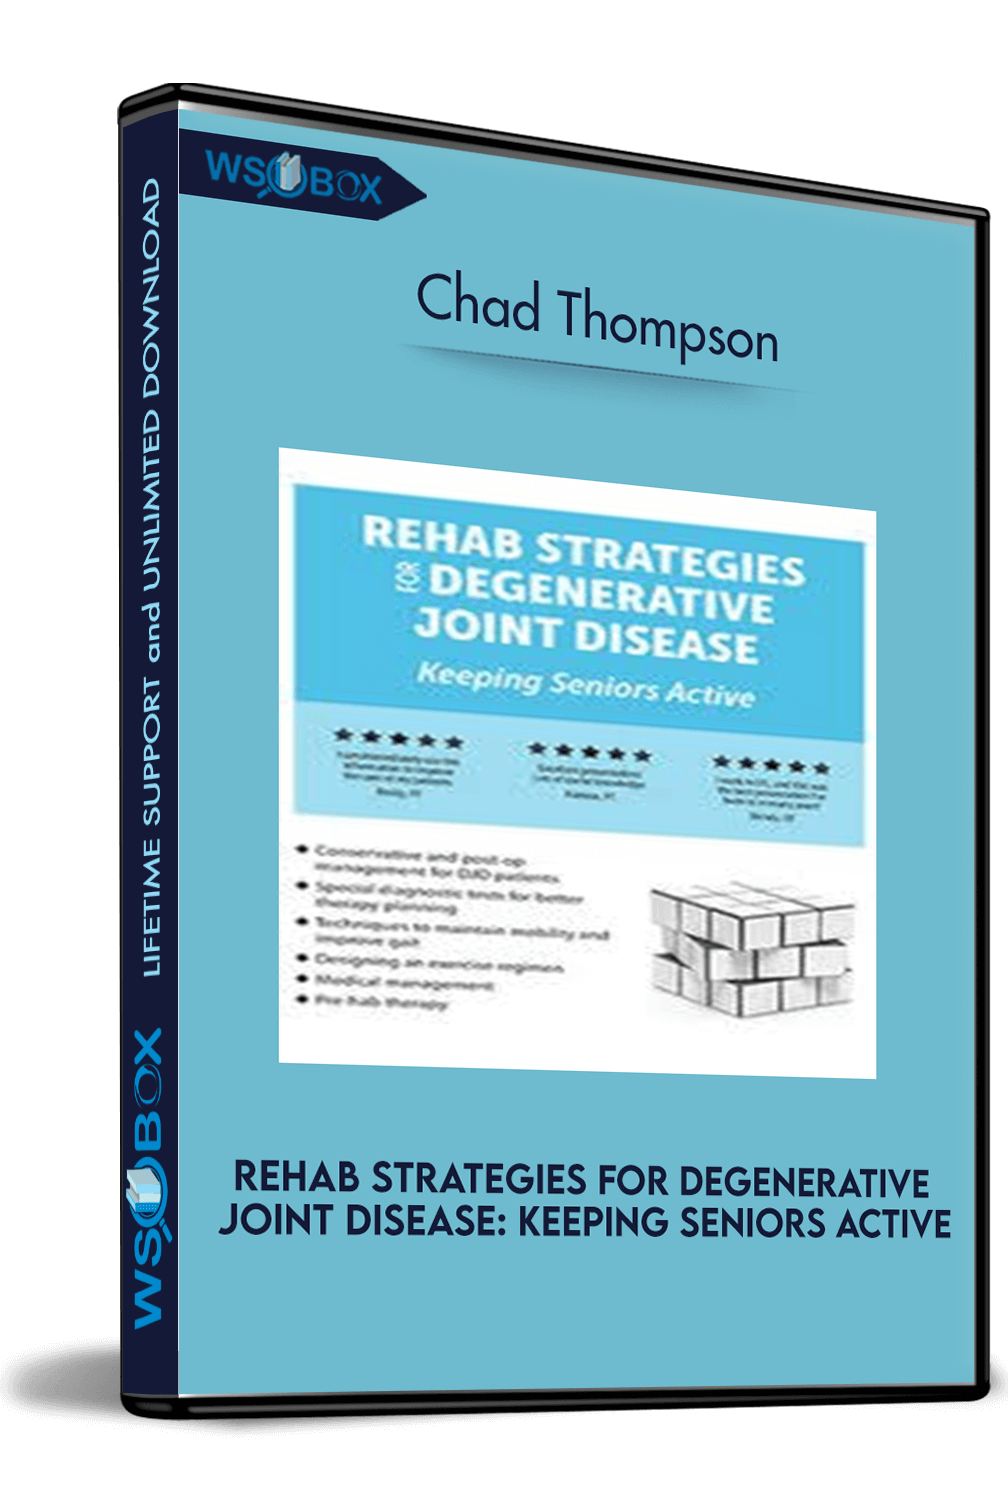 Rehab Strategies for Degenerative Joint Disease: Keeping Seniors Active – Chad Thompson